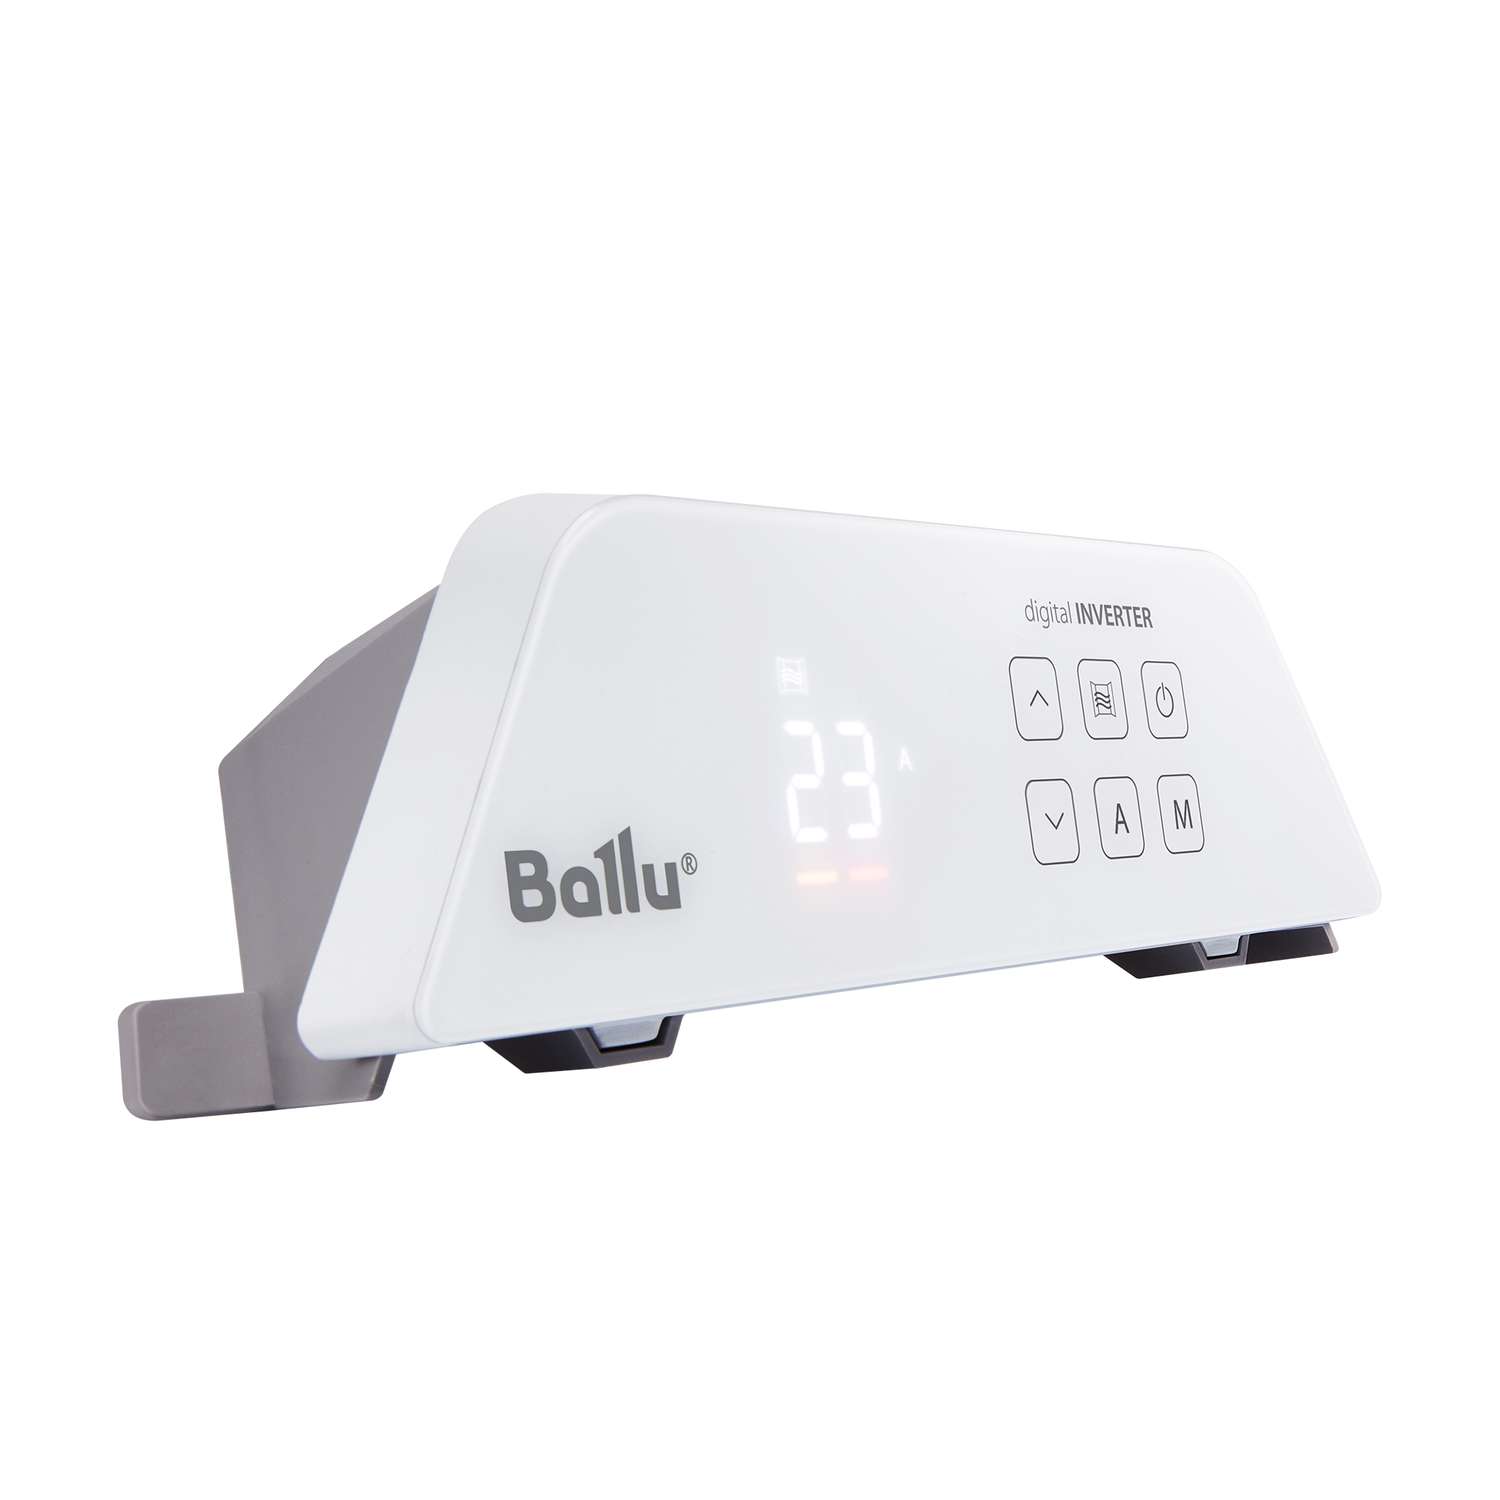 Блок управления Ballu Transformer Digital Inverter BCT/EVU-4I - фото 2